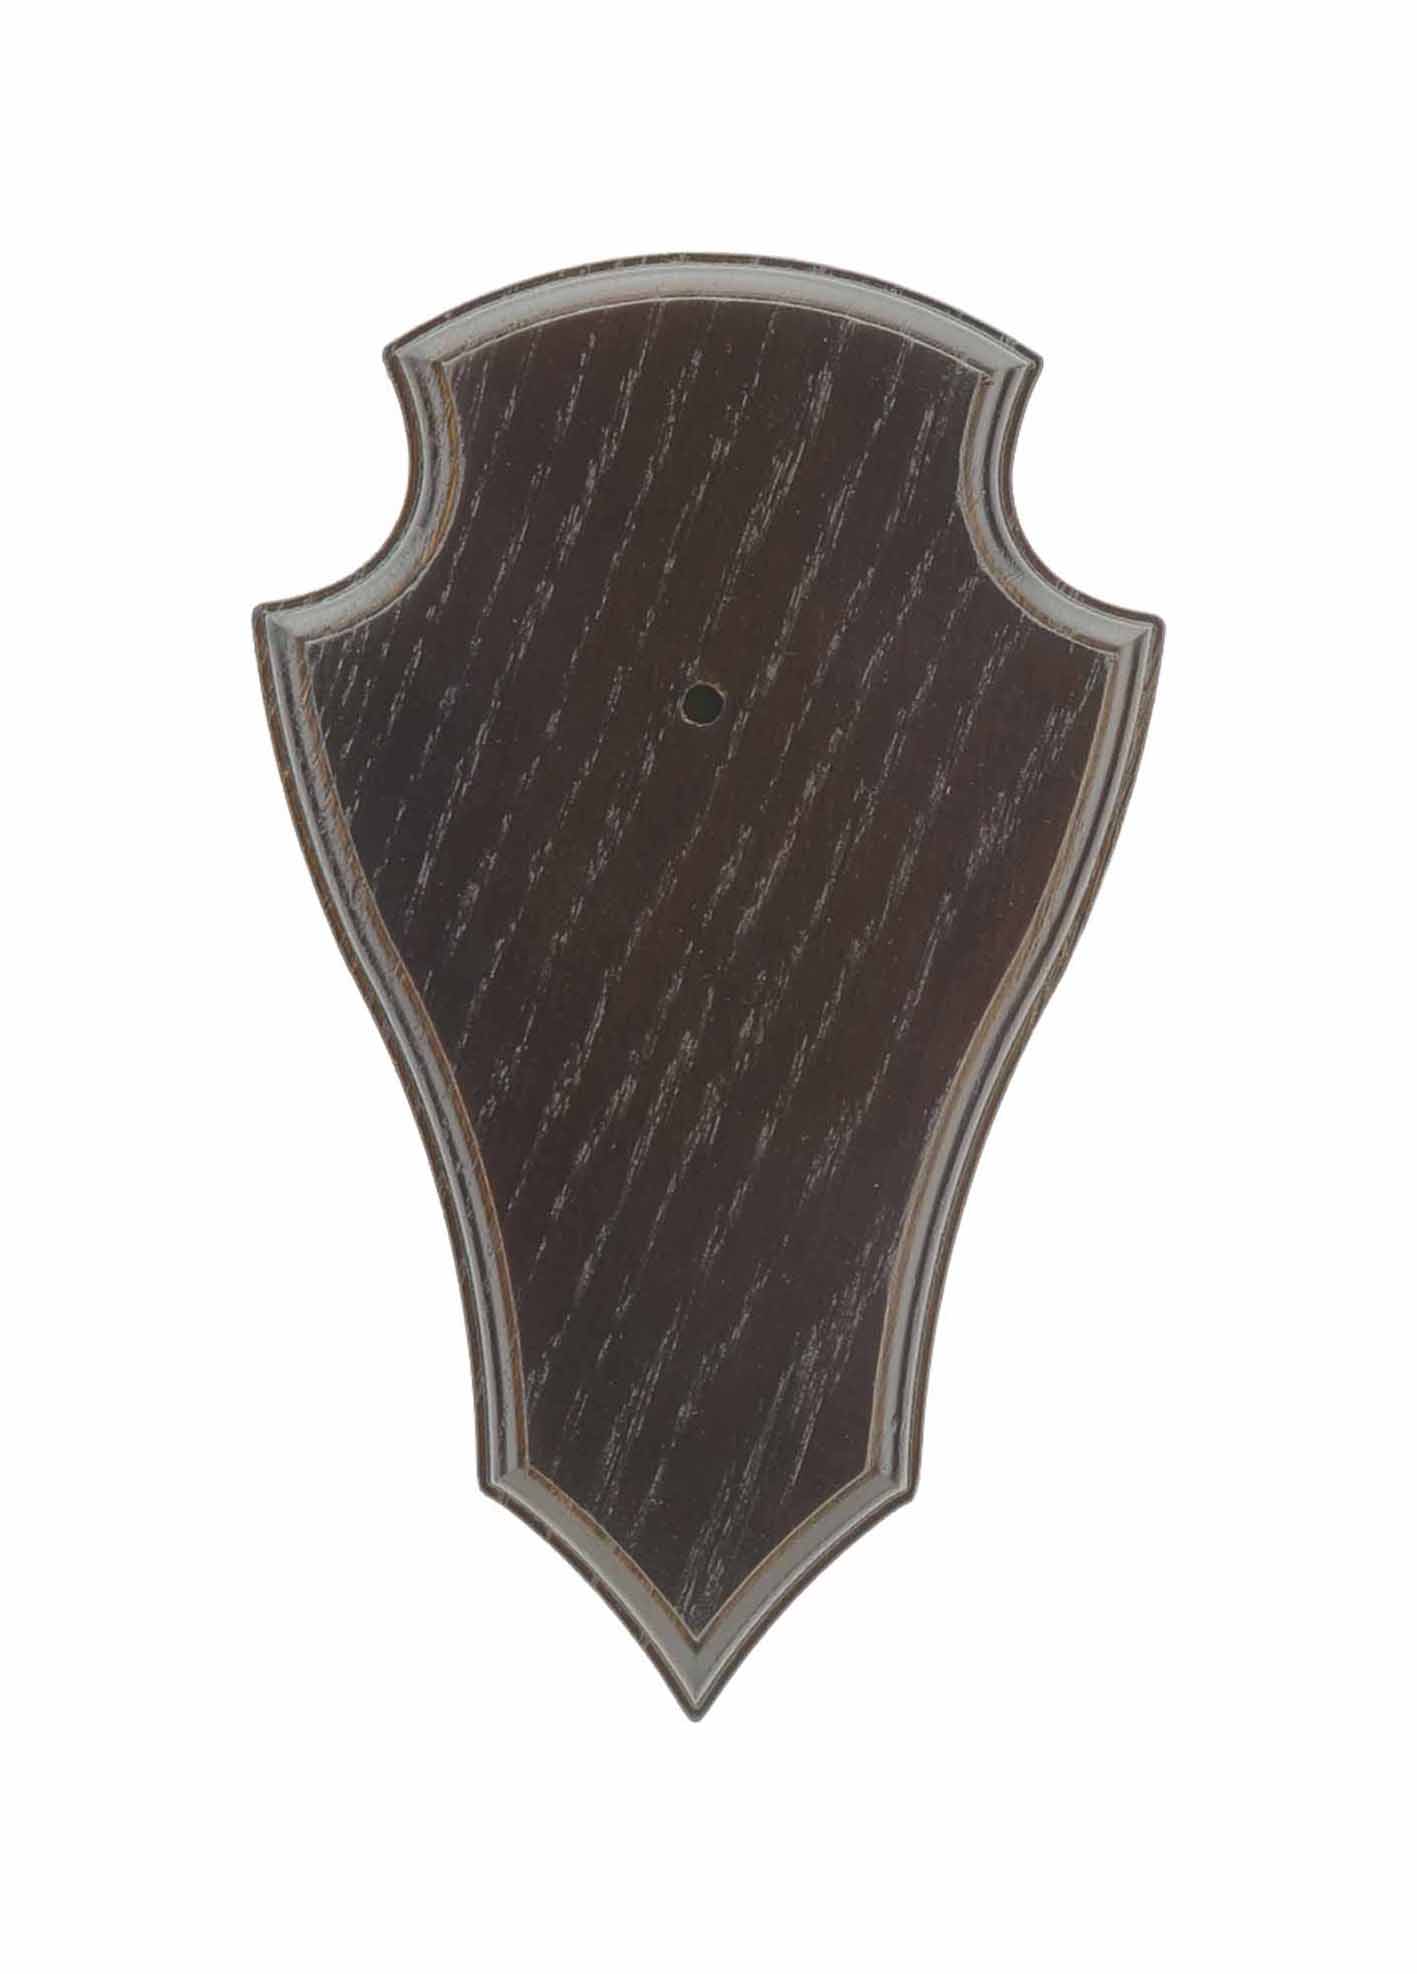 Oak Deer Trophy Plate 2 19x12 dark - set of 10 with plastic clips